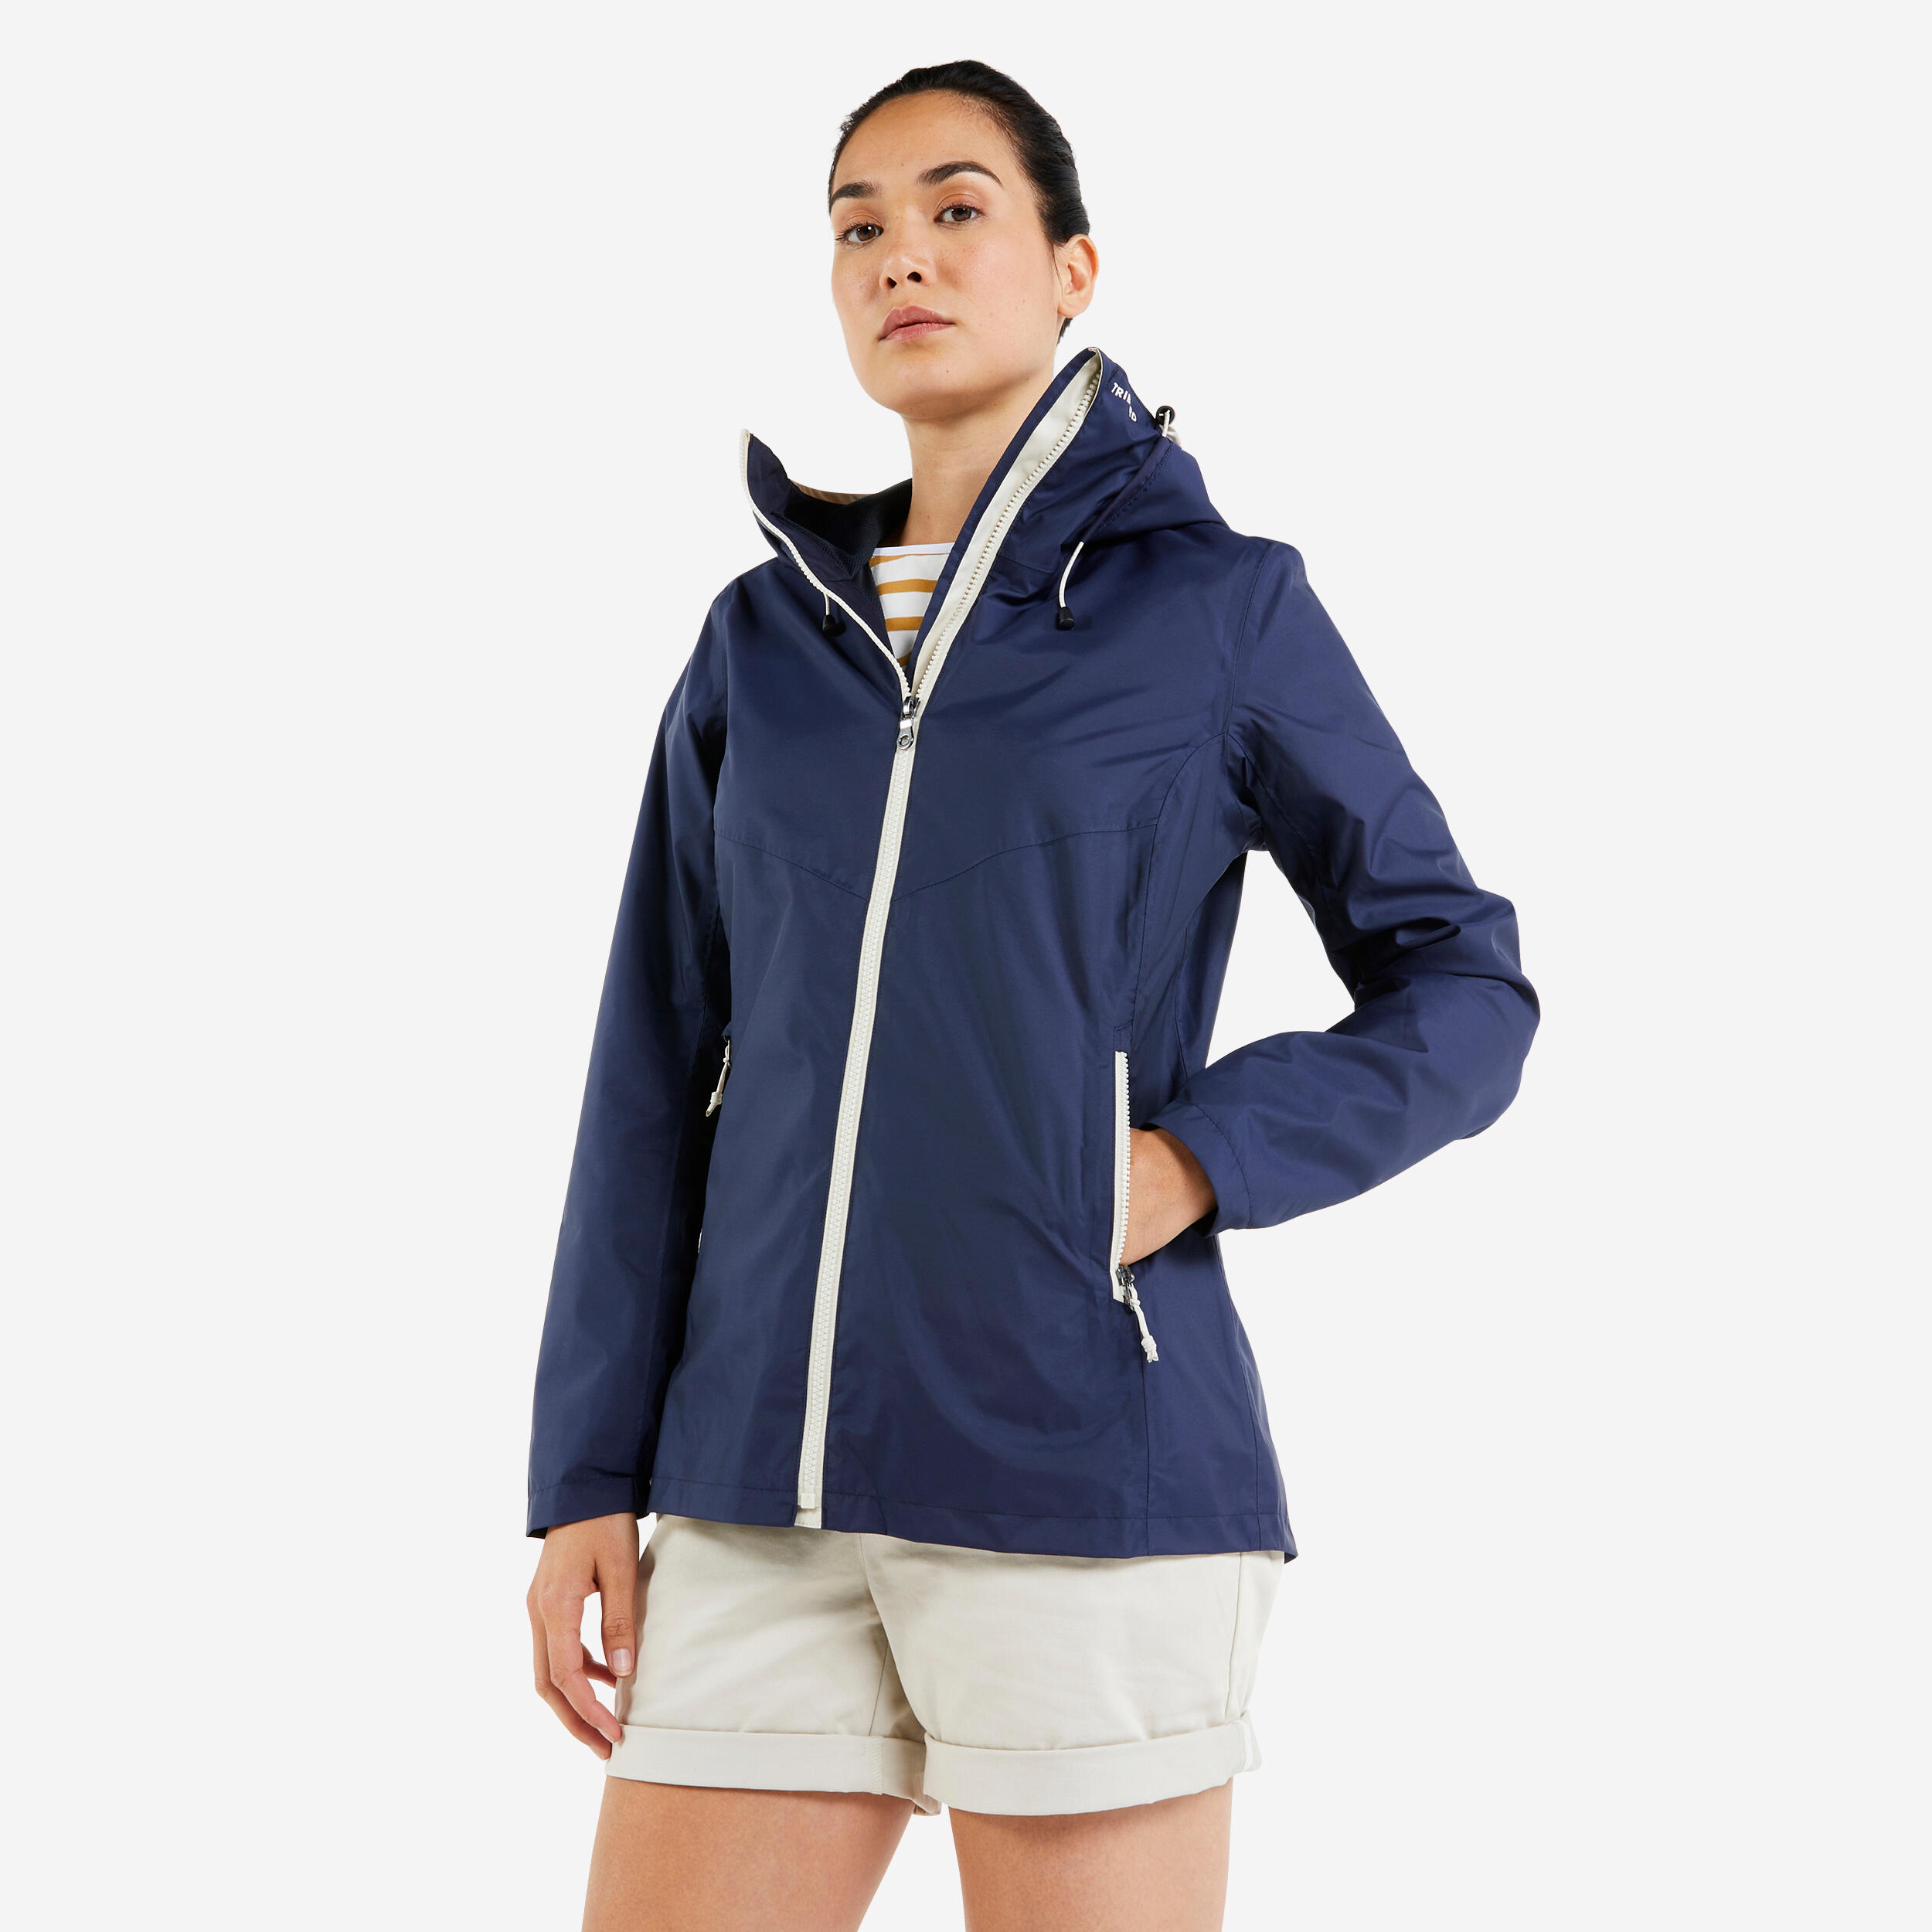 Women's sailing waterproof jacket - Wet-weather jacket SAILING 100 navy blue 1/8